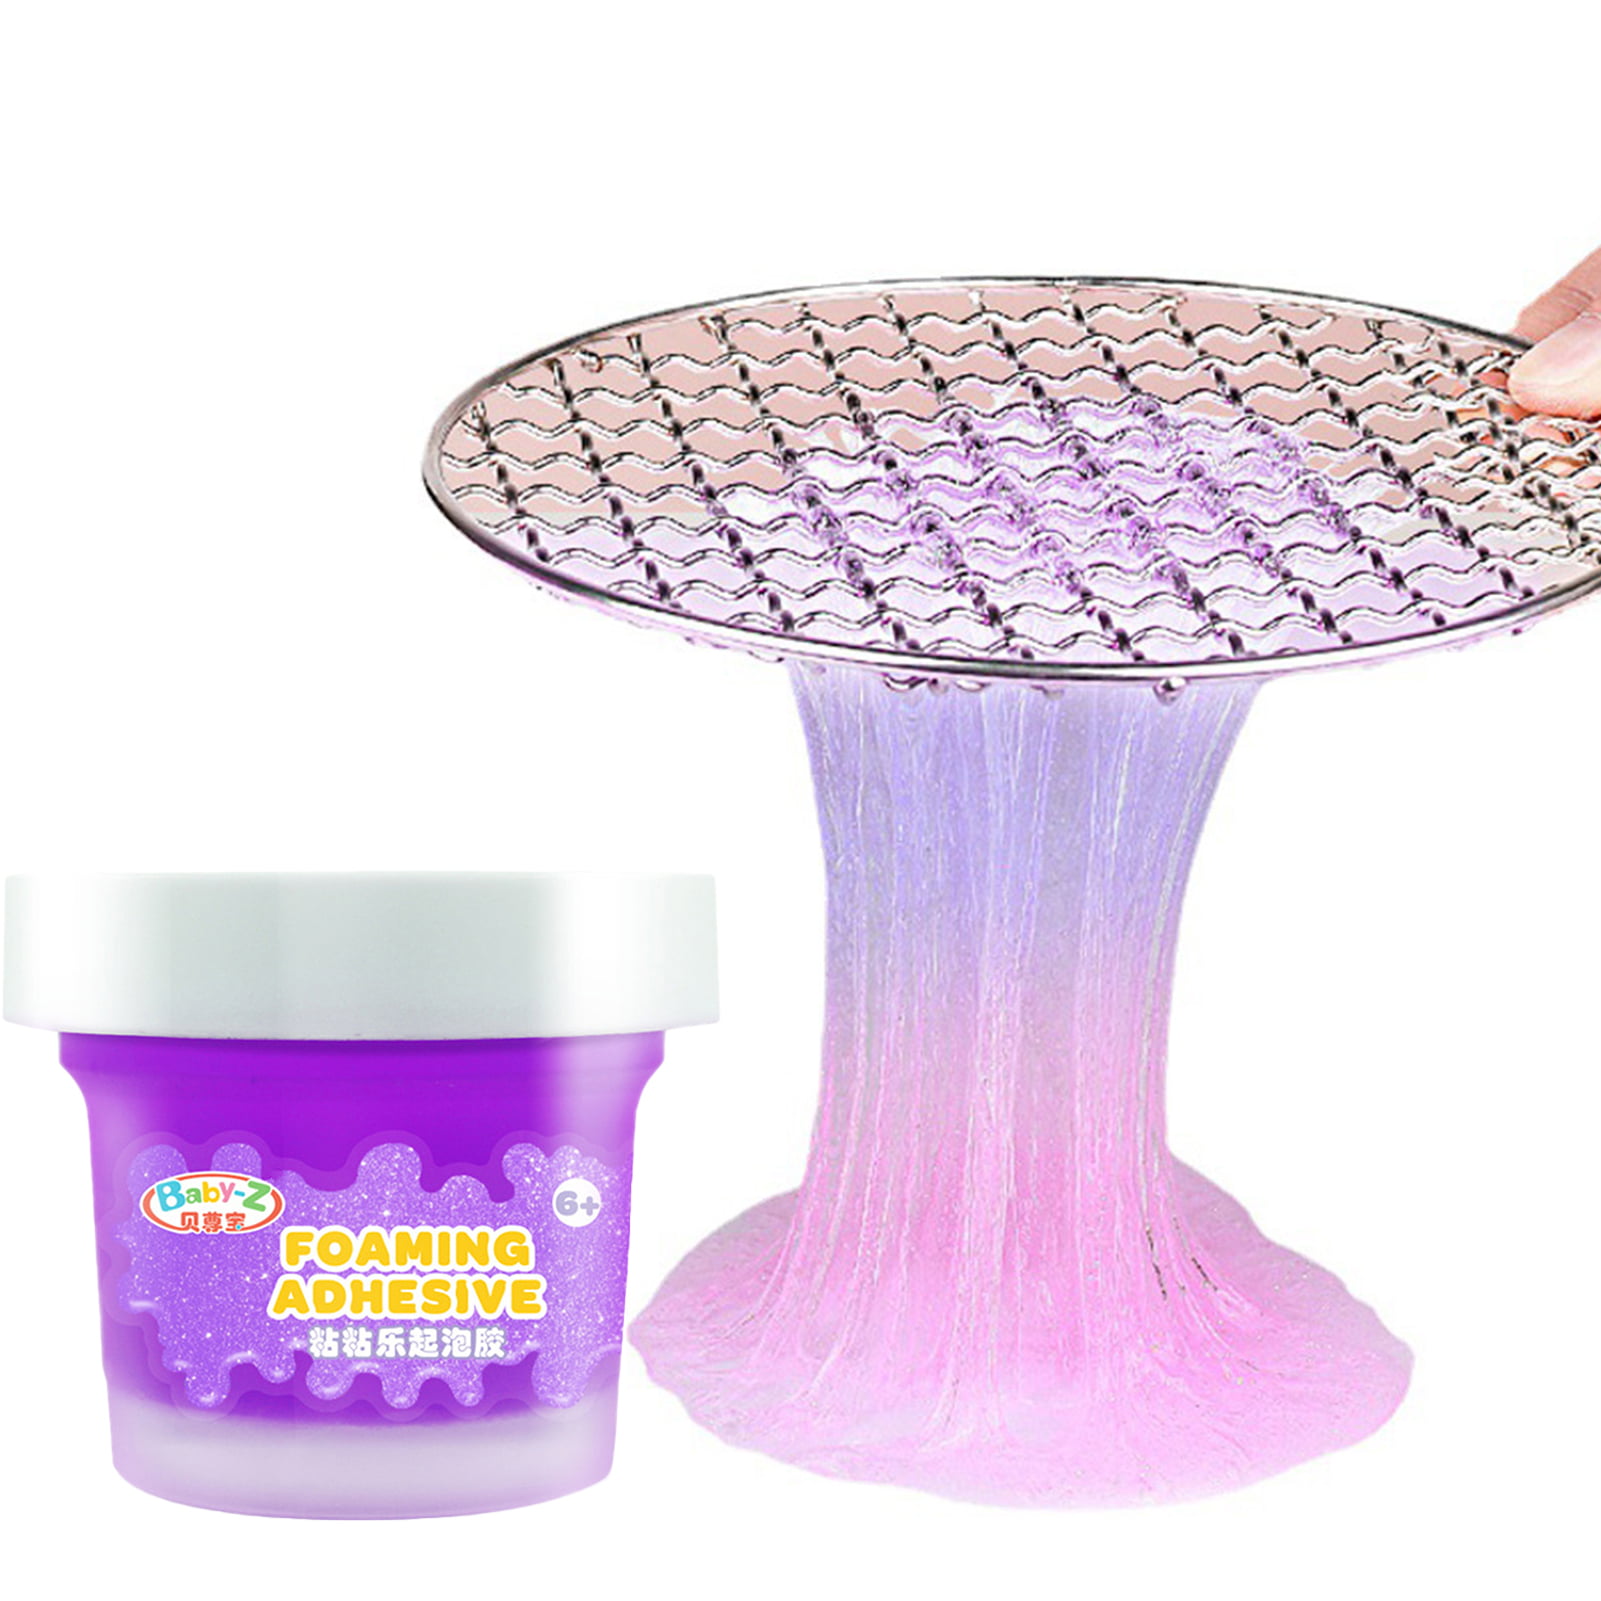 Aromatherapy Bye Bye Stress | Pastel Purple Butter Slime